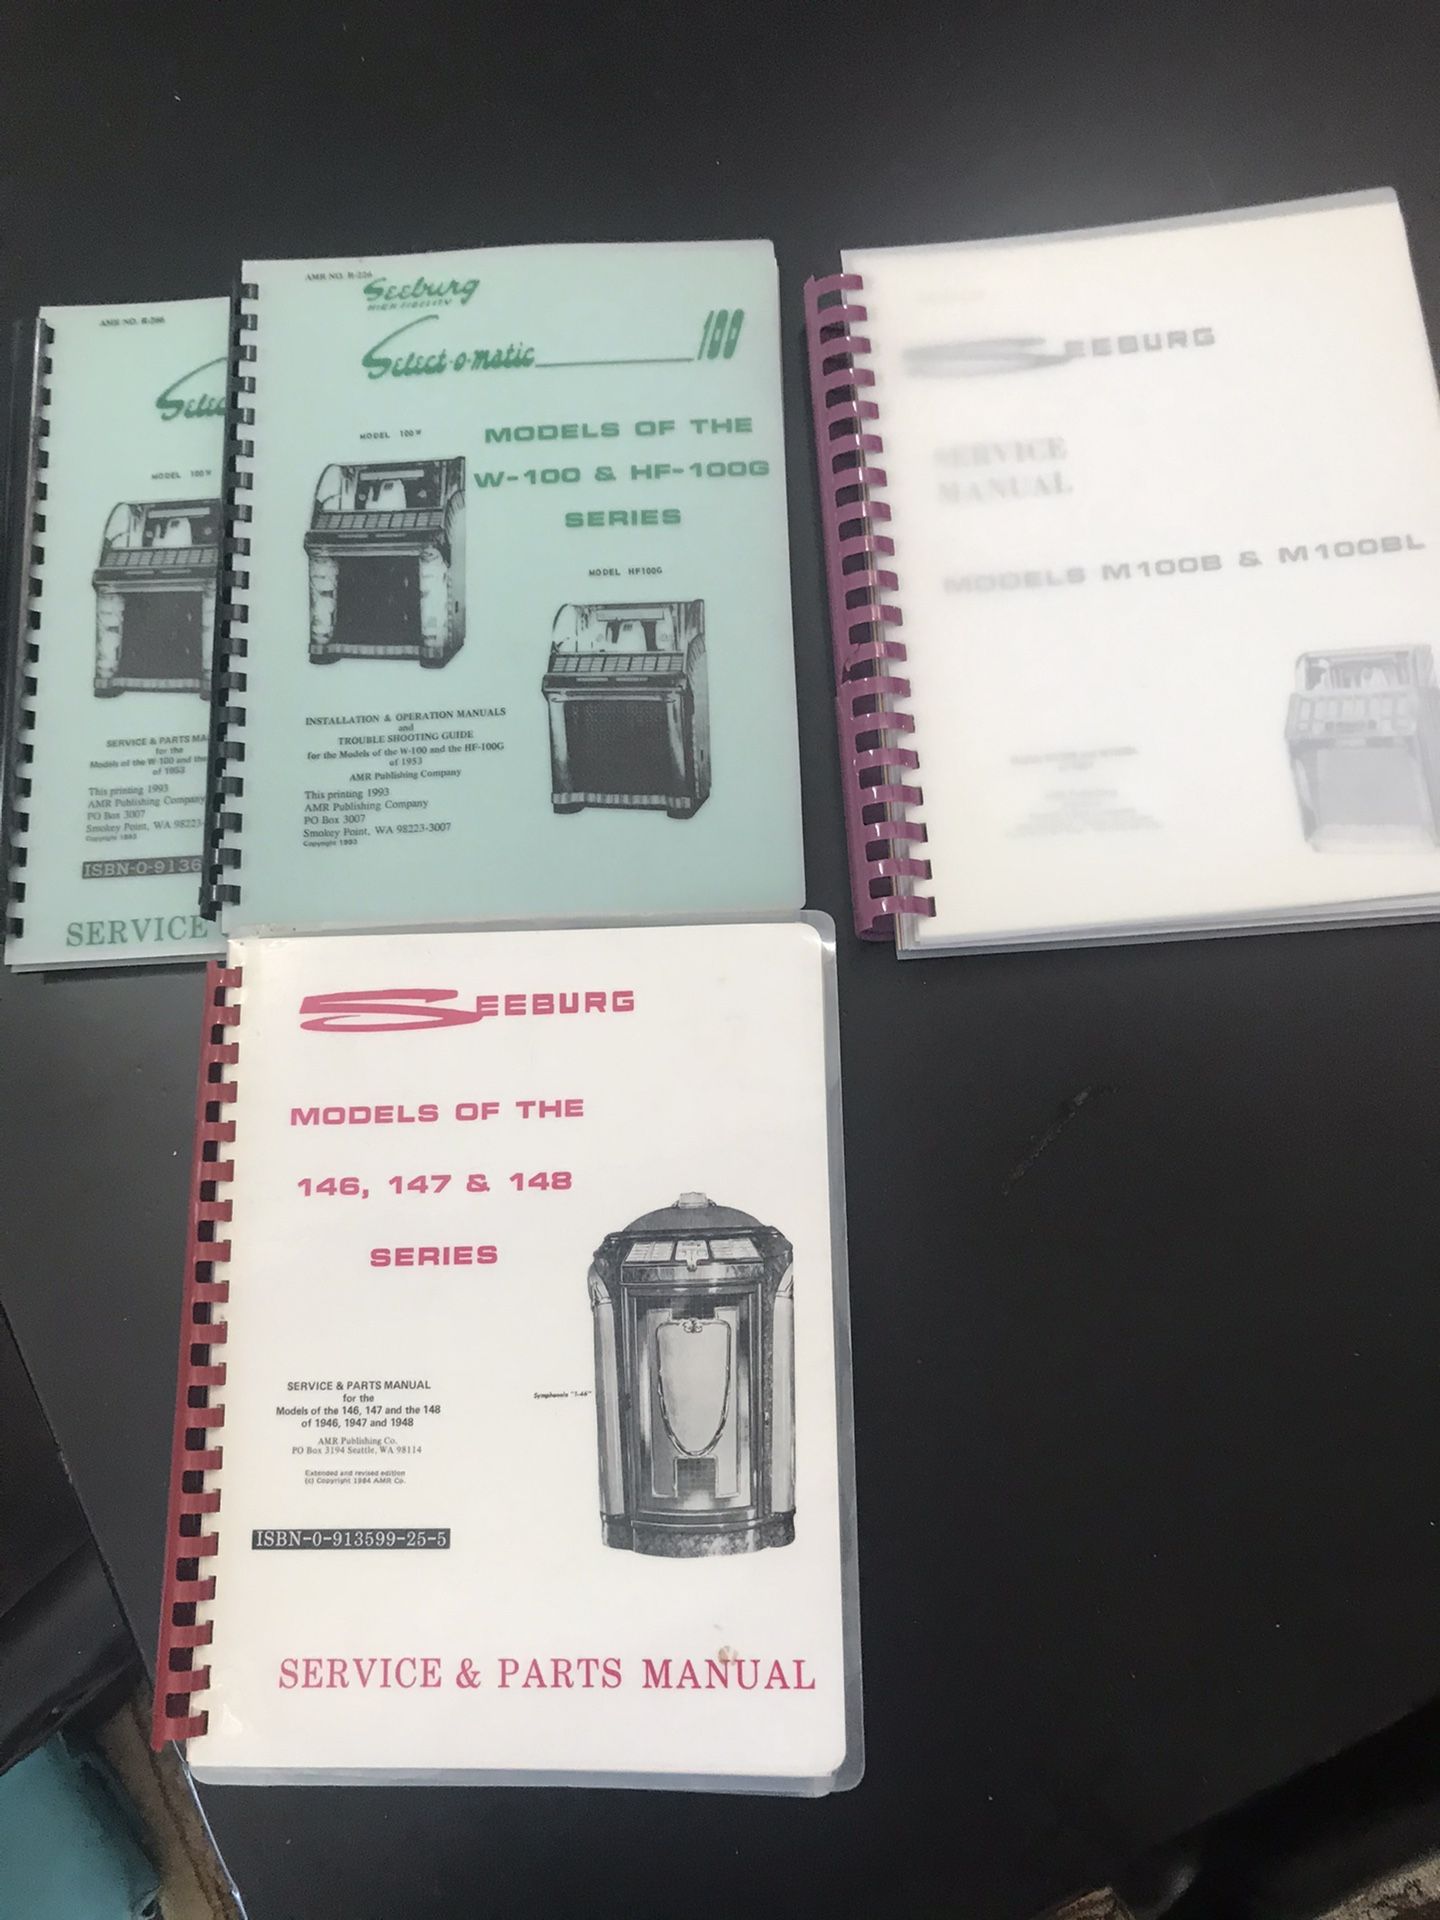 Seeburg Jukebox manuals